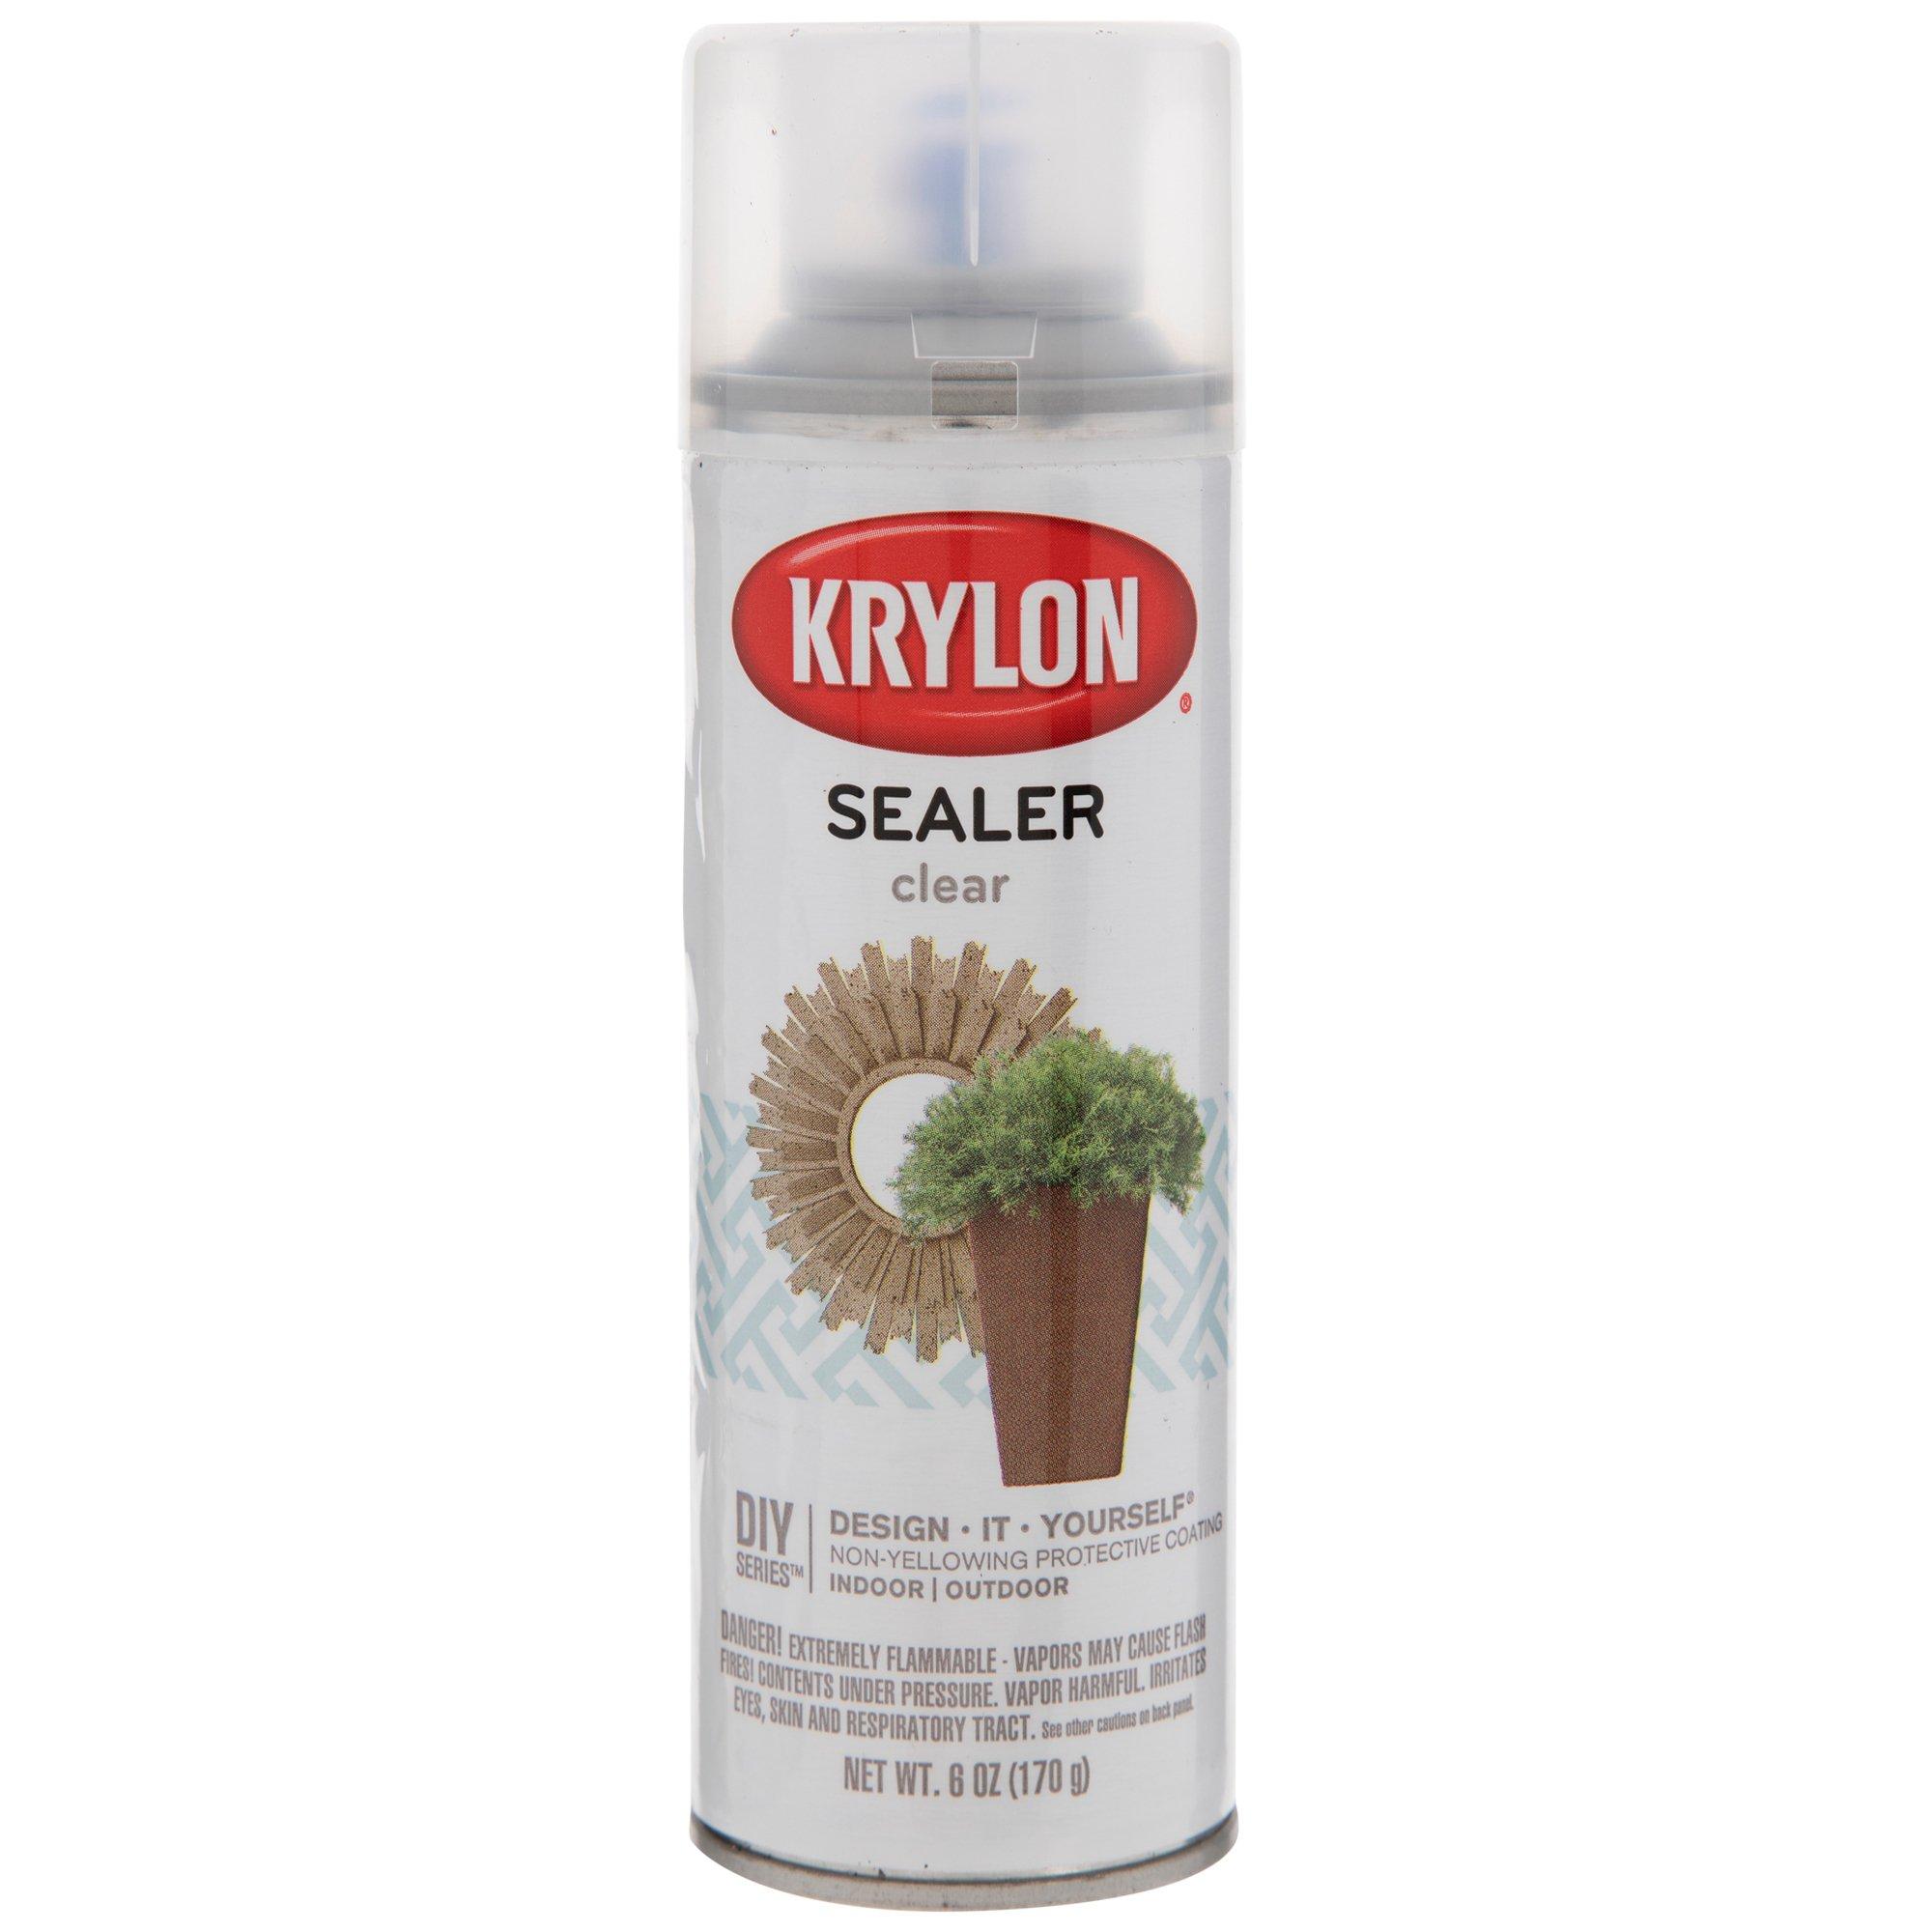 Krylon Sealer Spray Paint